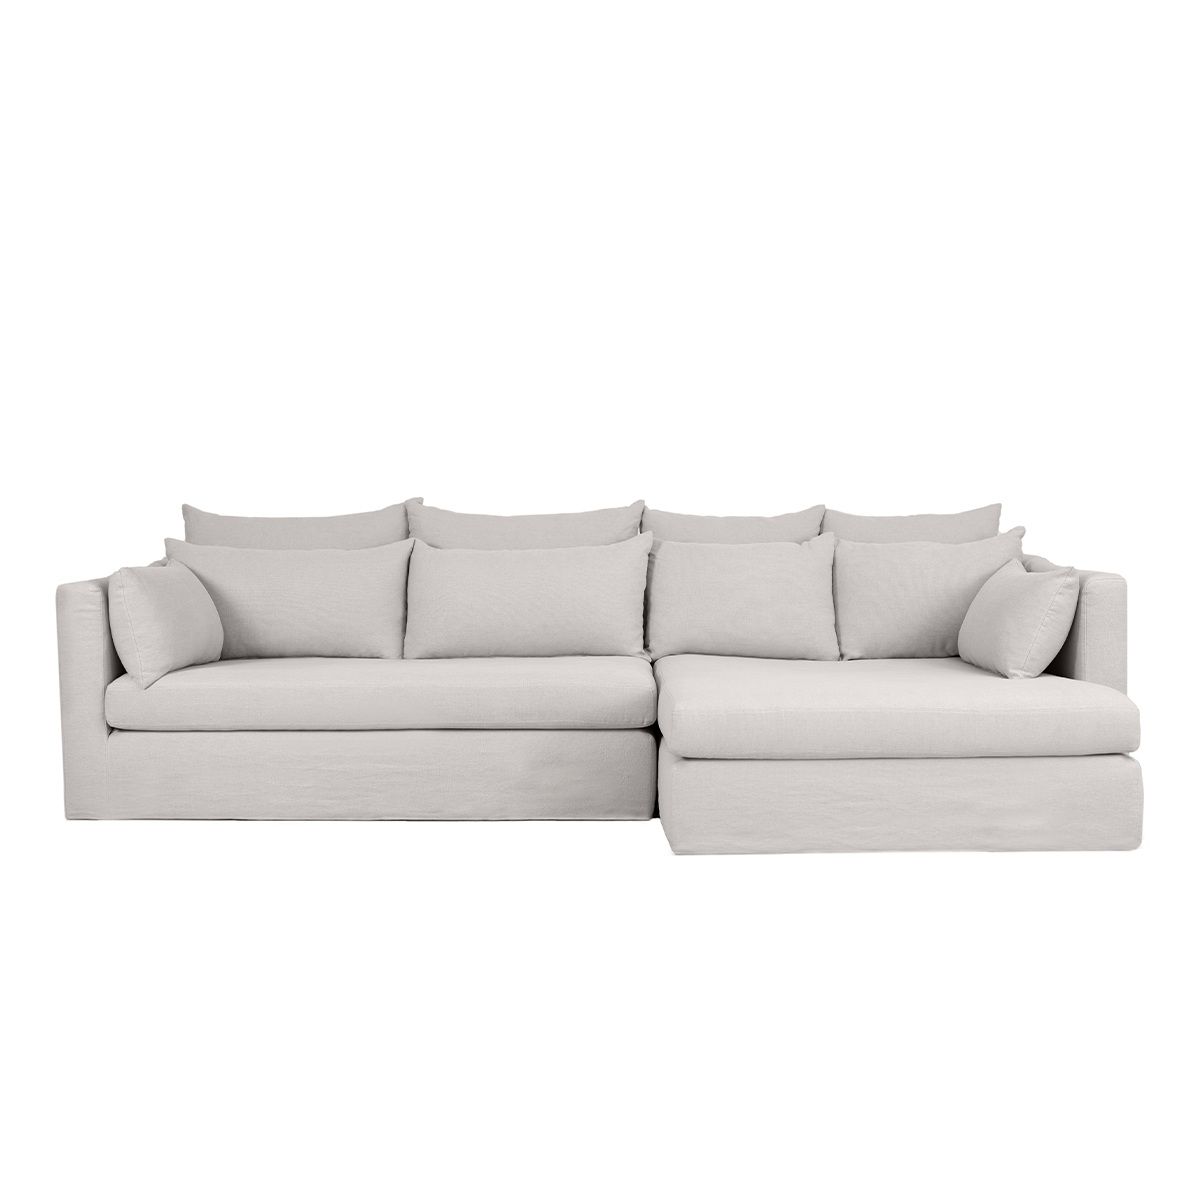 SuperBox corner sofa - Right angle, L300 x P180 x H85 cm - Linen - image 1